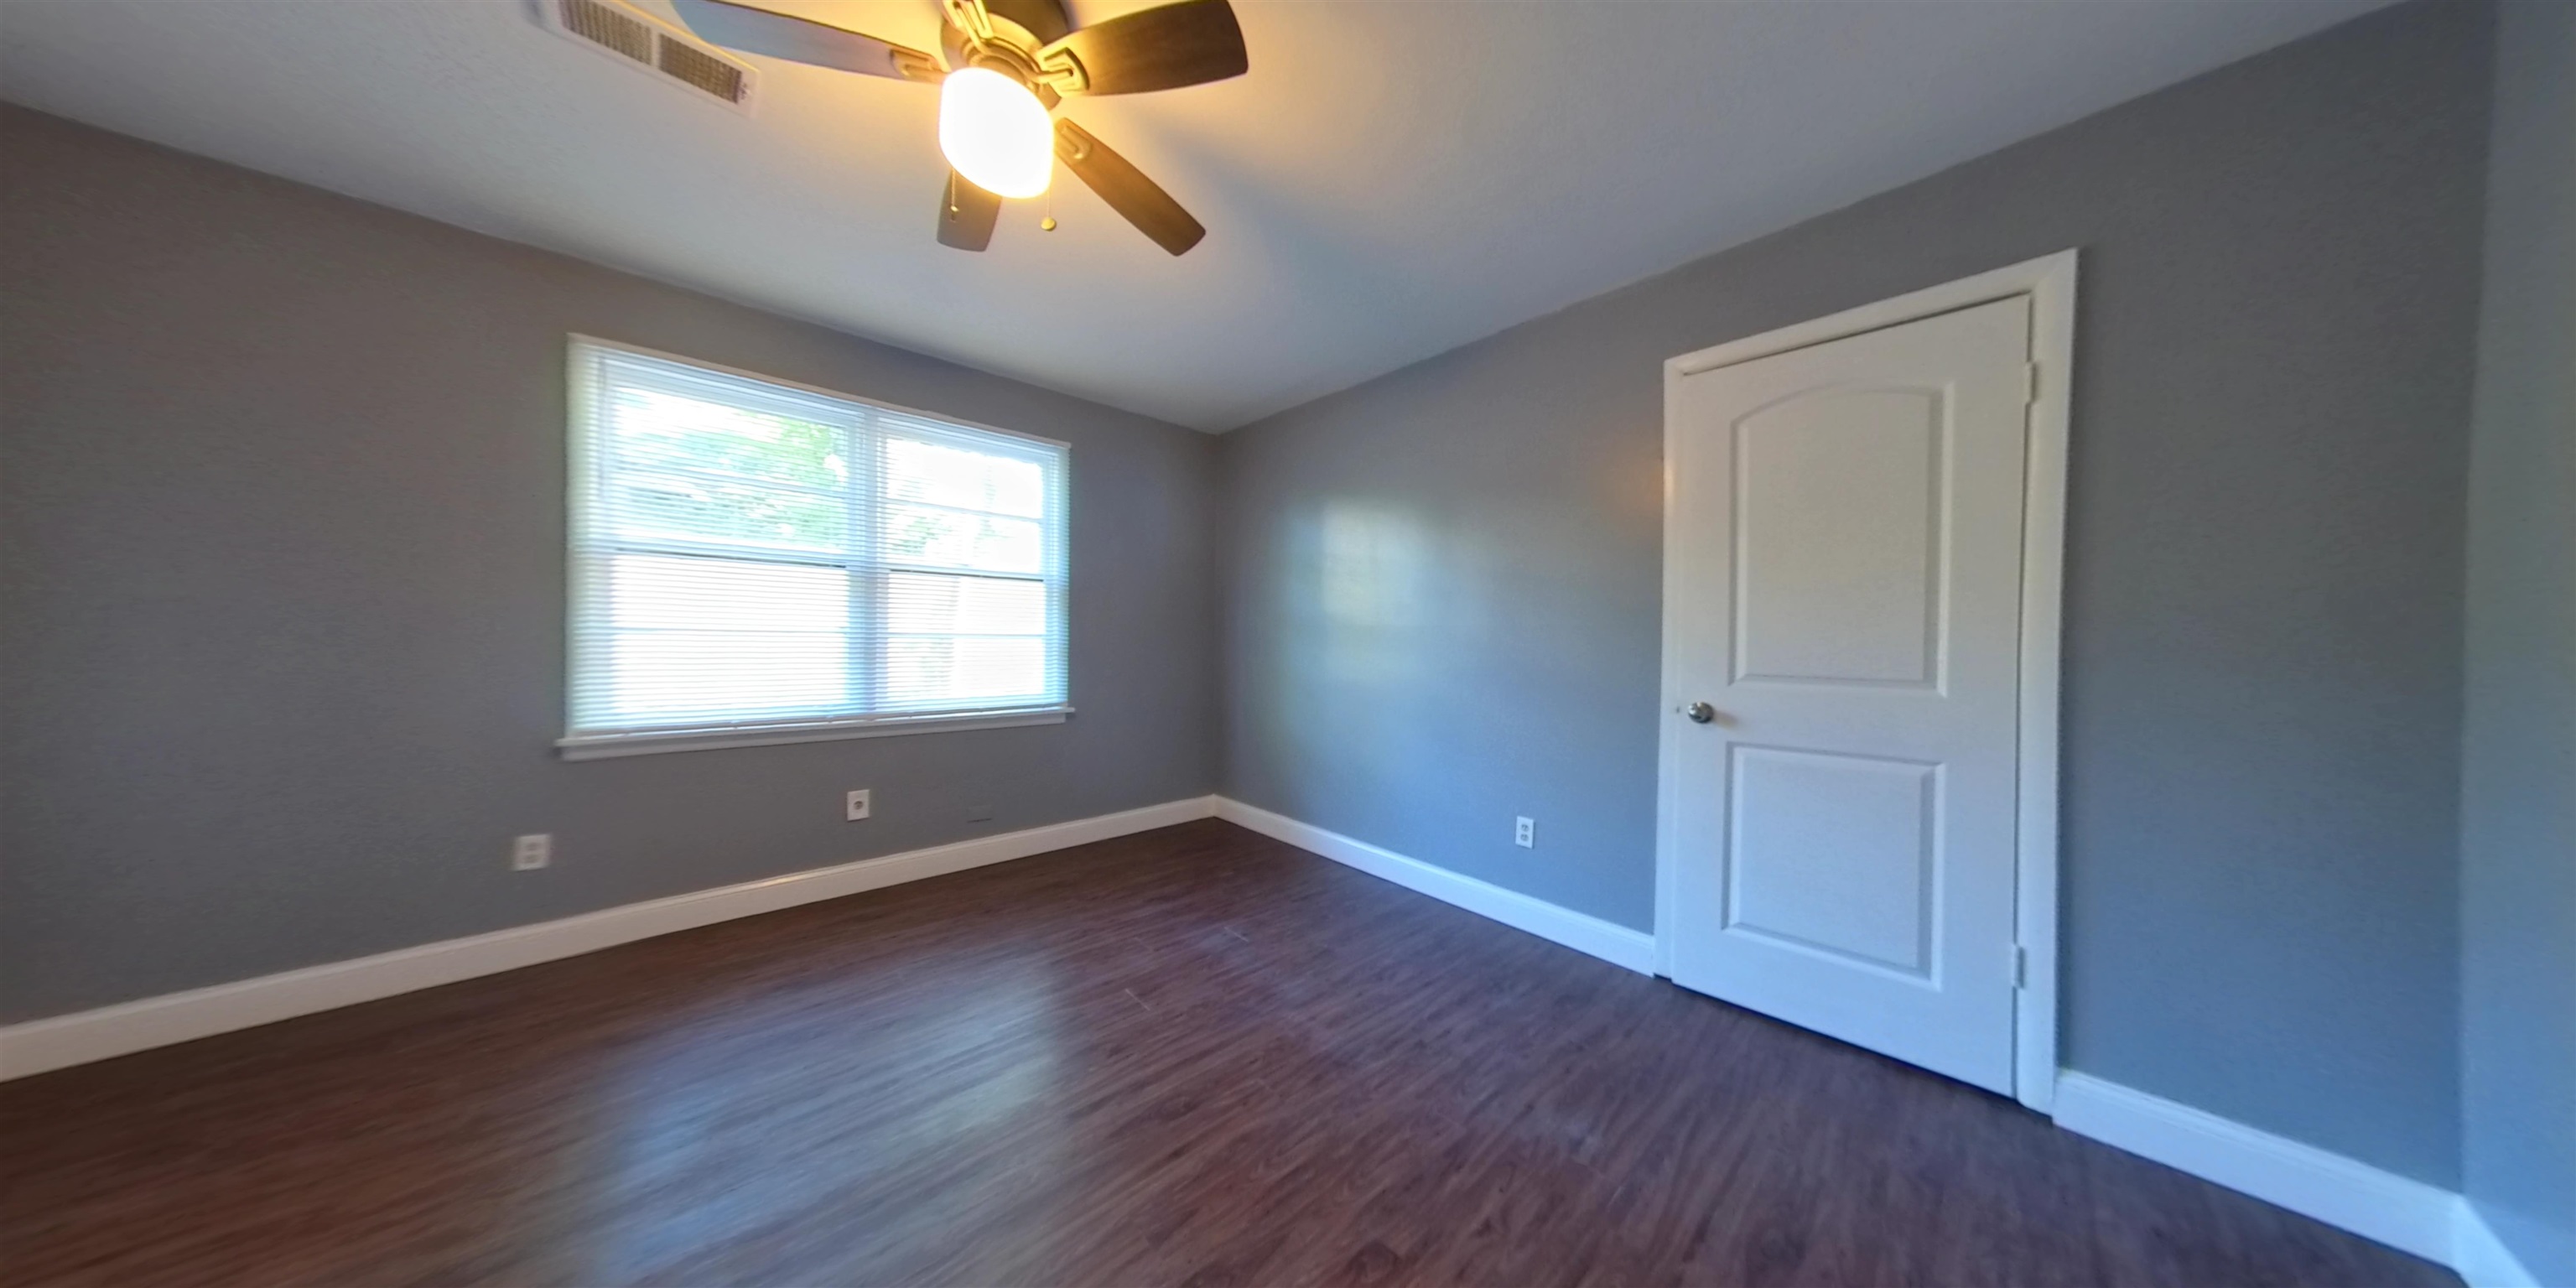 an empty room with wooden floor chandelier fan and windows